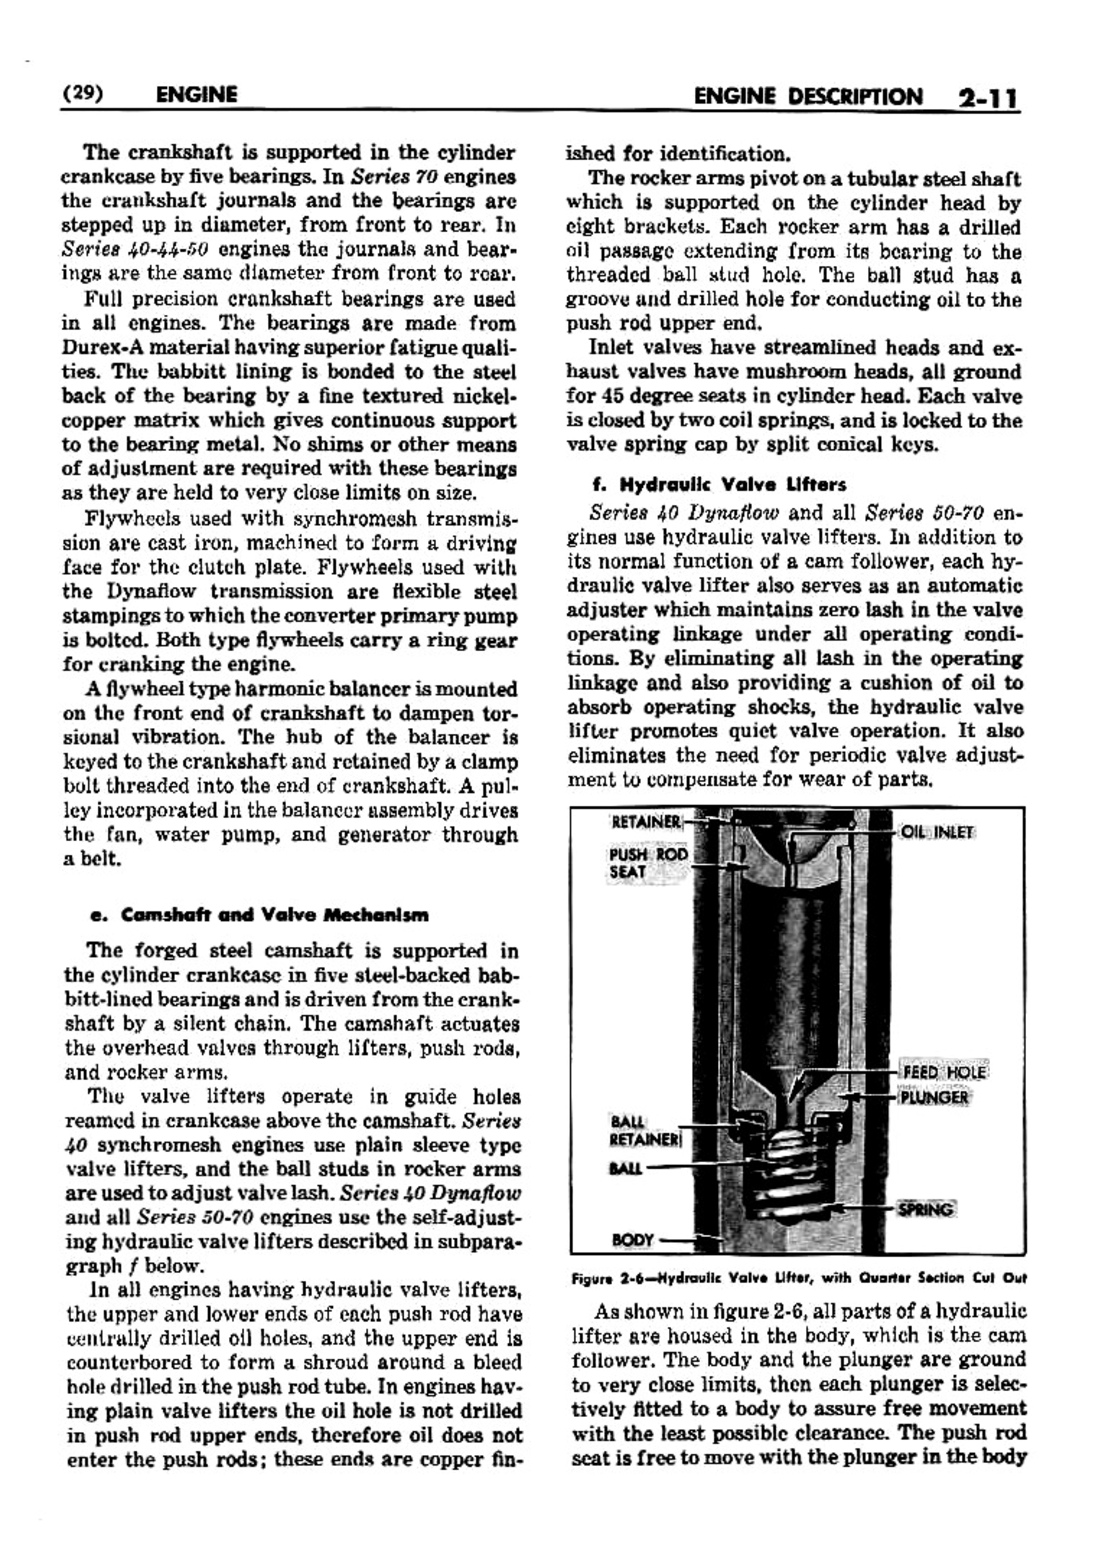 n_03 1952 Buick Shop Manual - Engine-011-011.jpg